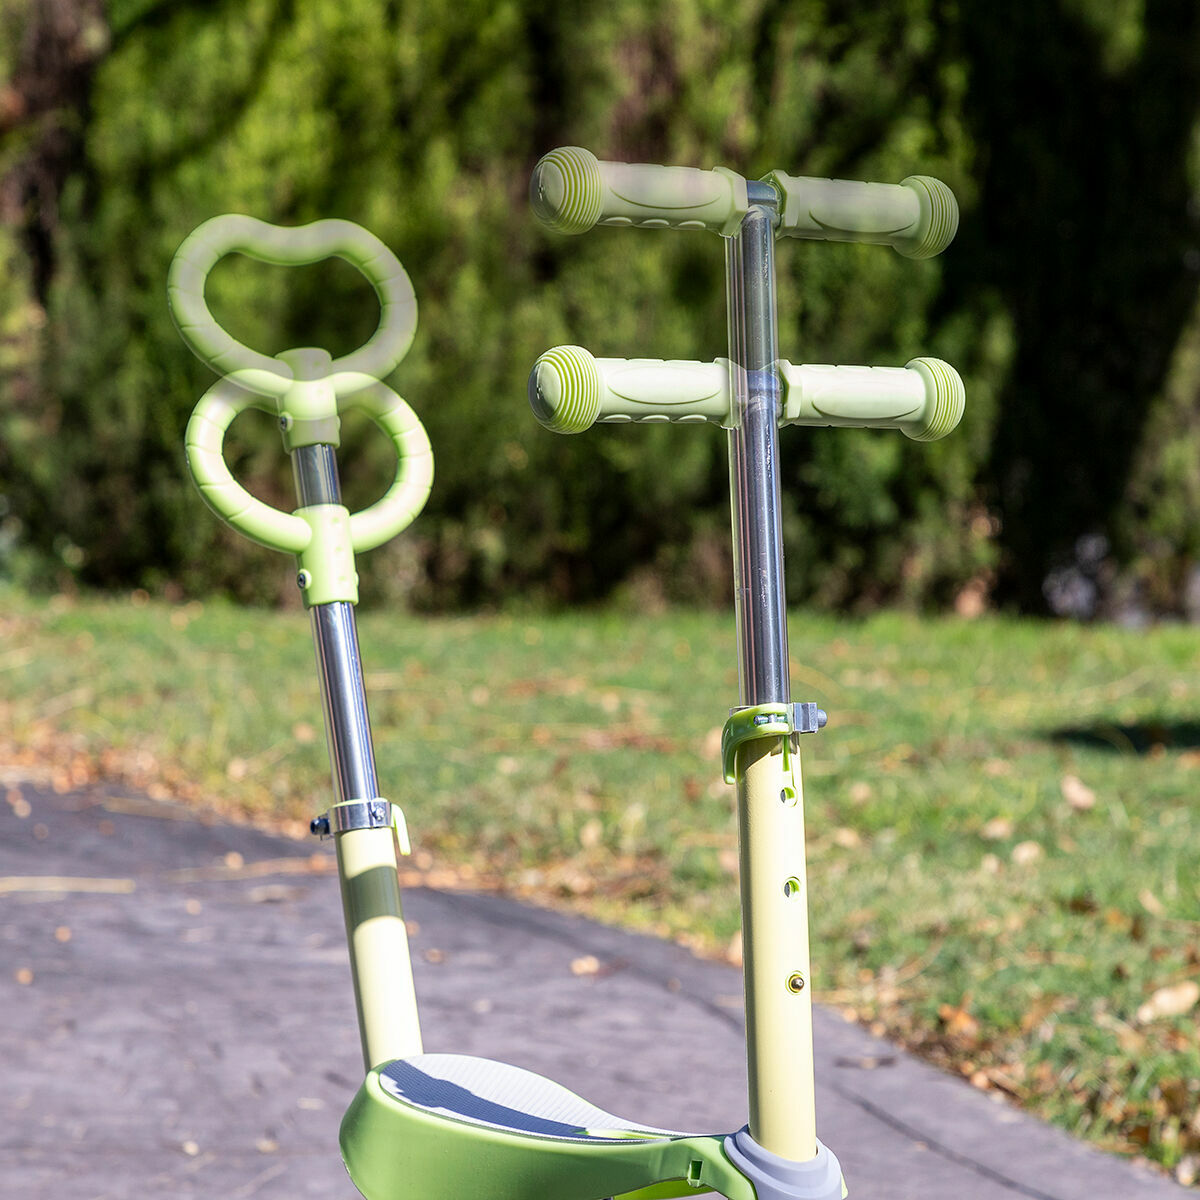 Kaufe 3-in-1 wandelbarer Roller für Kinder Scuvol InnovaGoods bei AWK Flagship um € 72.00